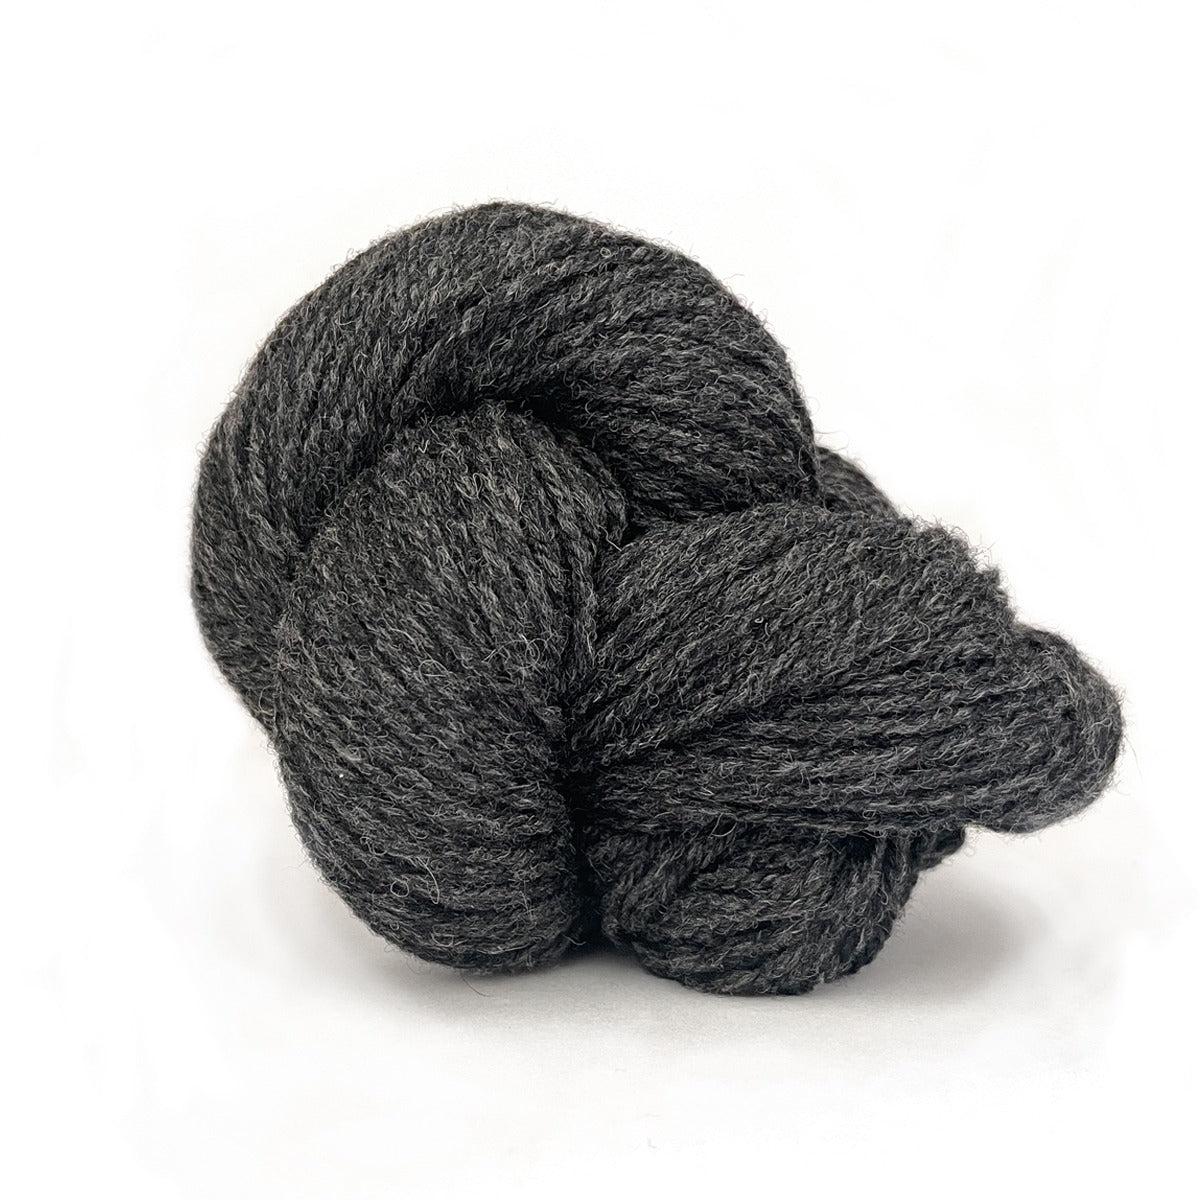 Kelbourne Woolens-Erin-yarn-010 Onyx-gather here online